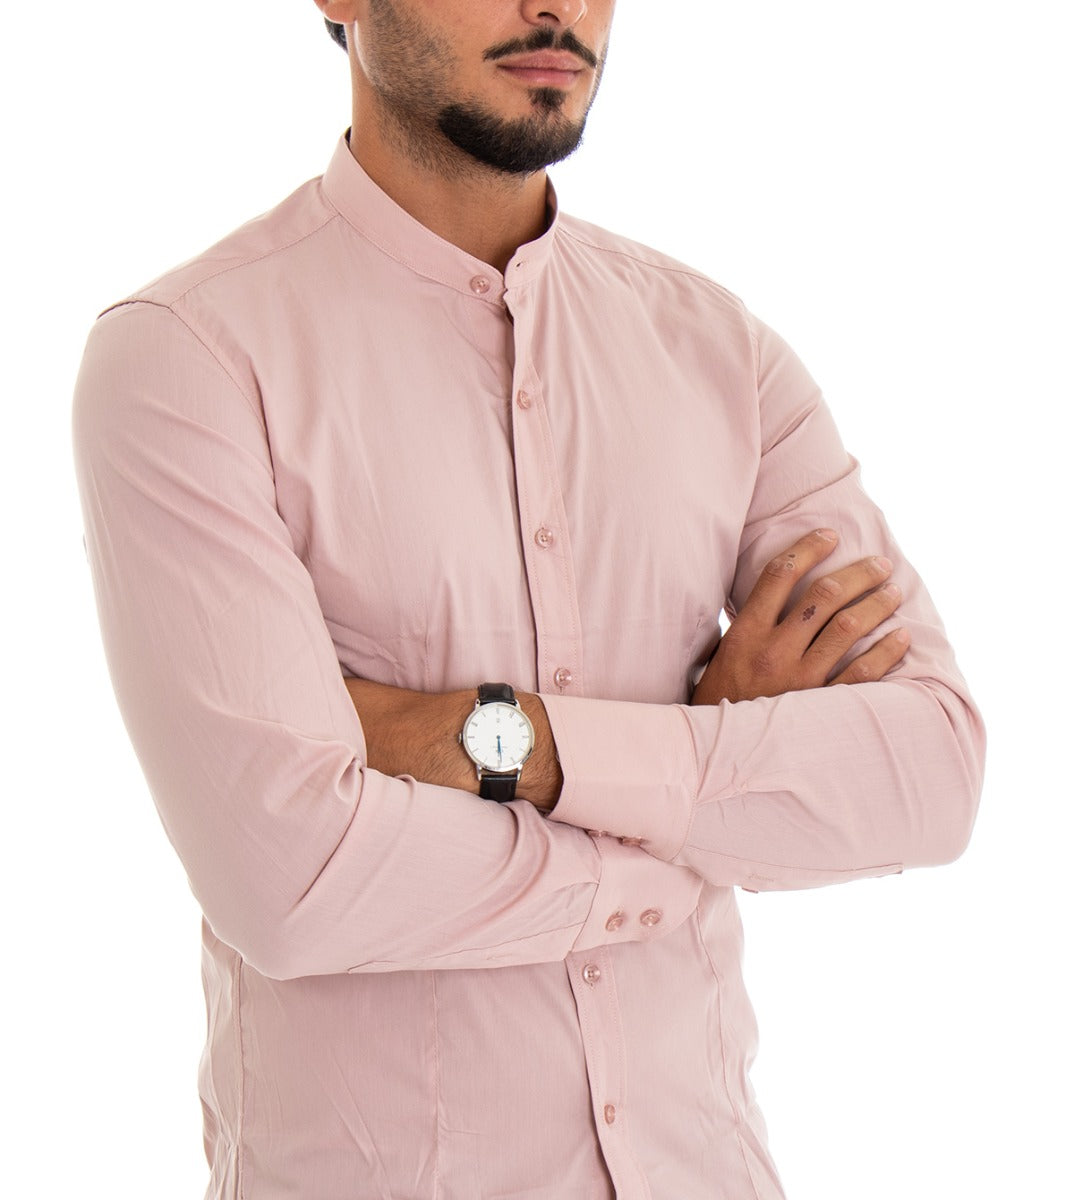 Men's Mandarin Collar Shirt Long Sleeve Slim Fit Basic Casual Cotton Pink GIOSAL-C1817A